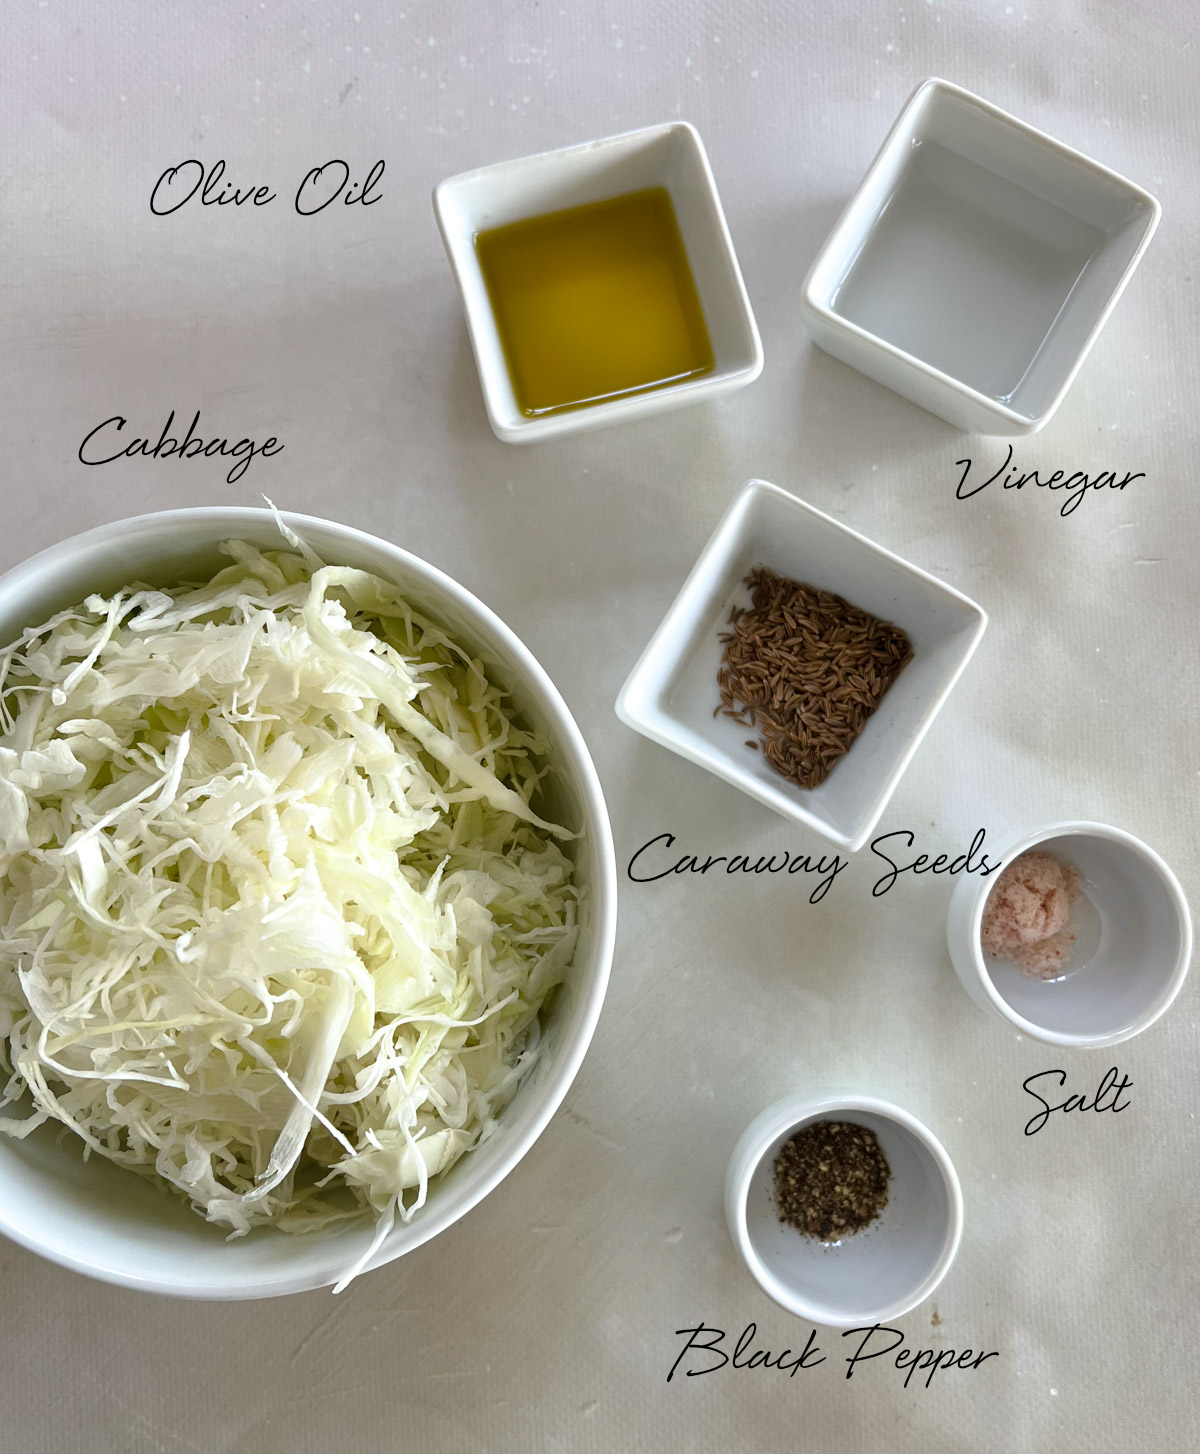 shredded cabbage, oilive oil, white vinegar, caraway seeds, salt and black pepper in white bowls